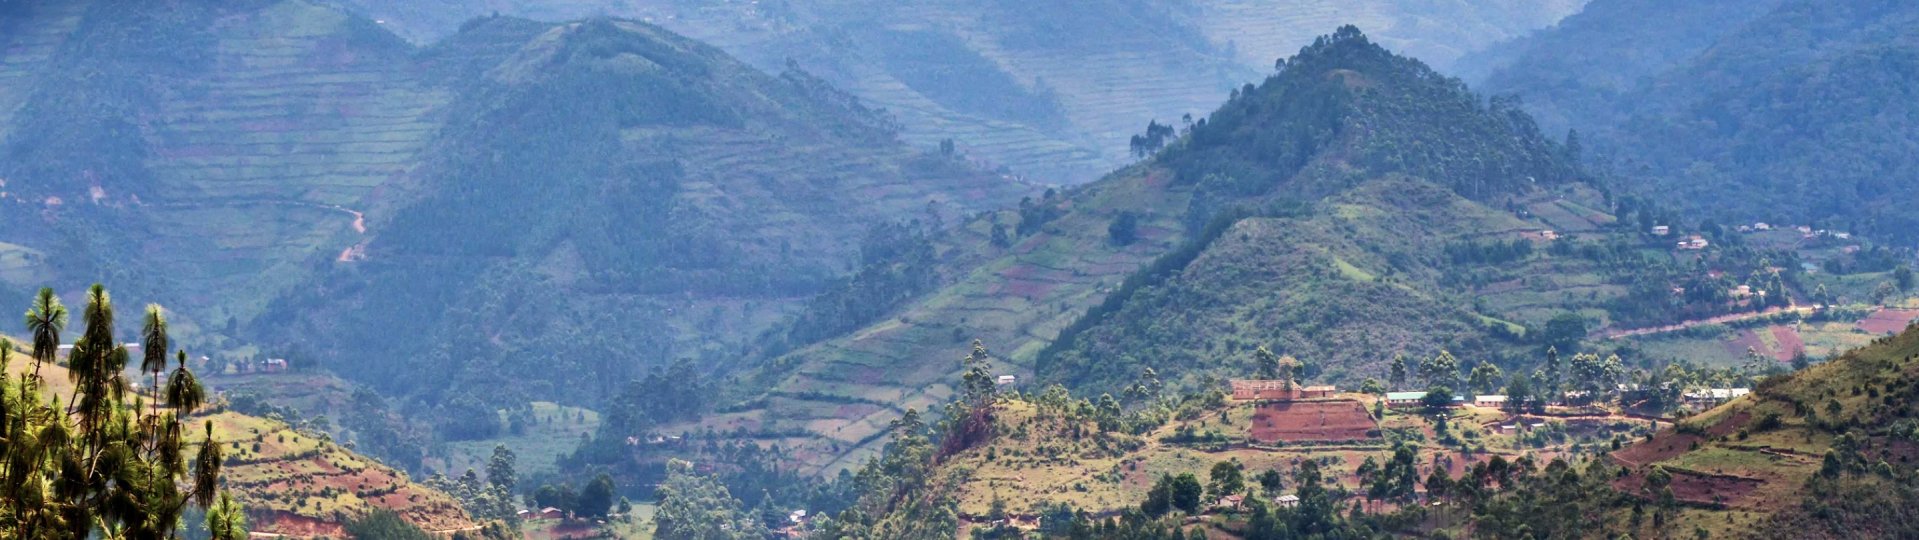 Uganda Mountains